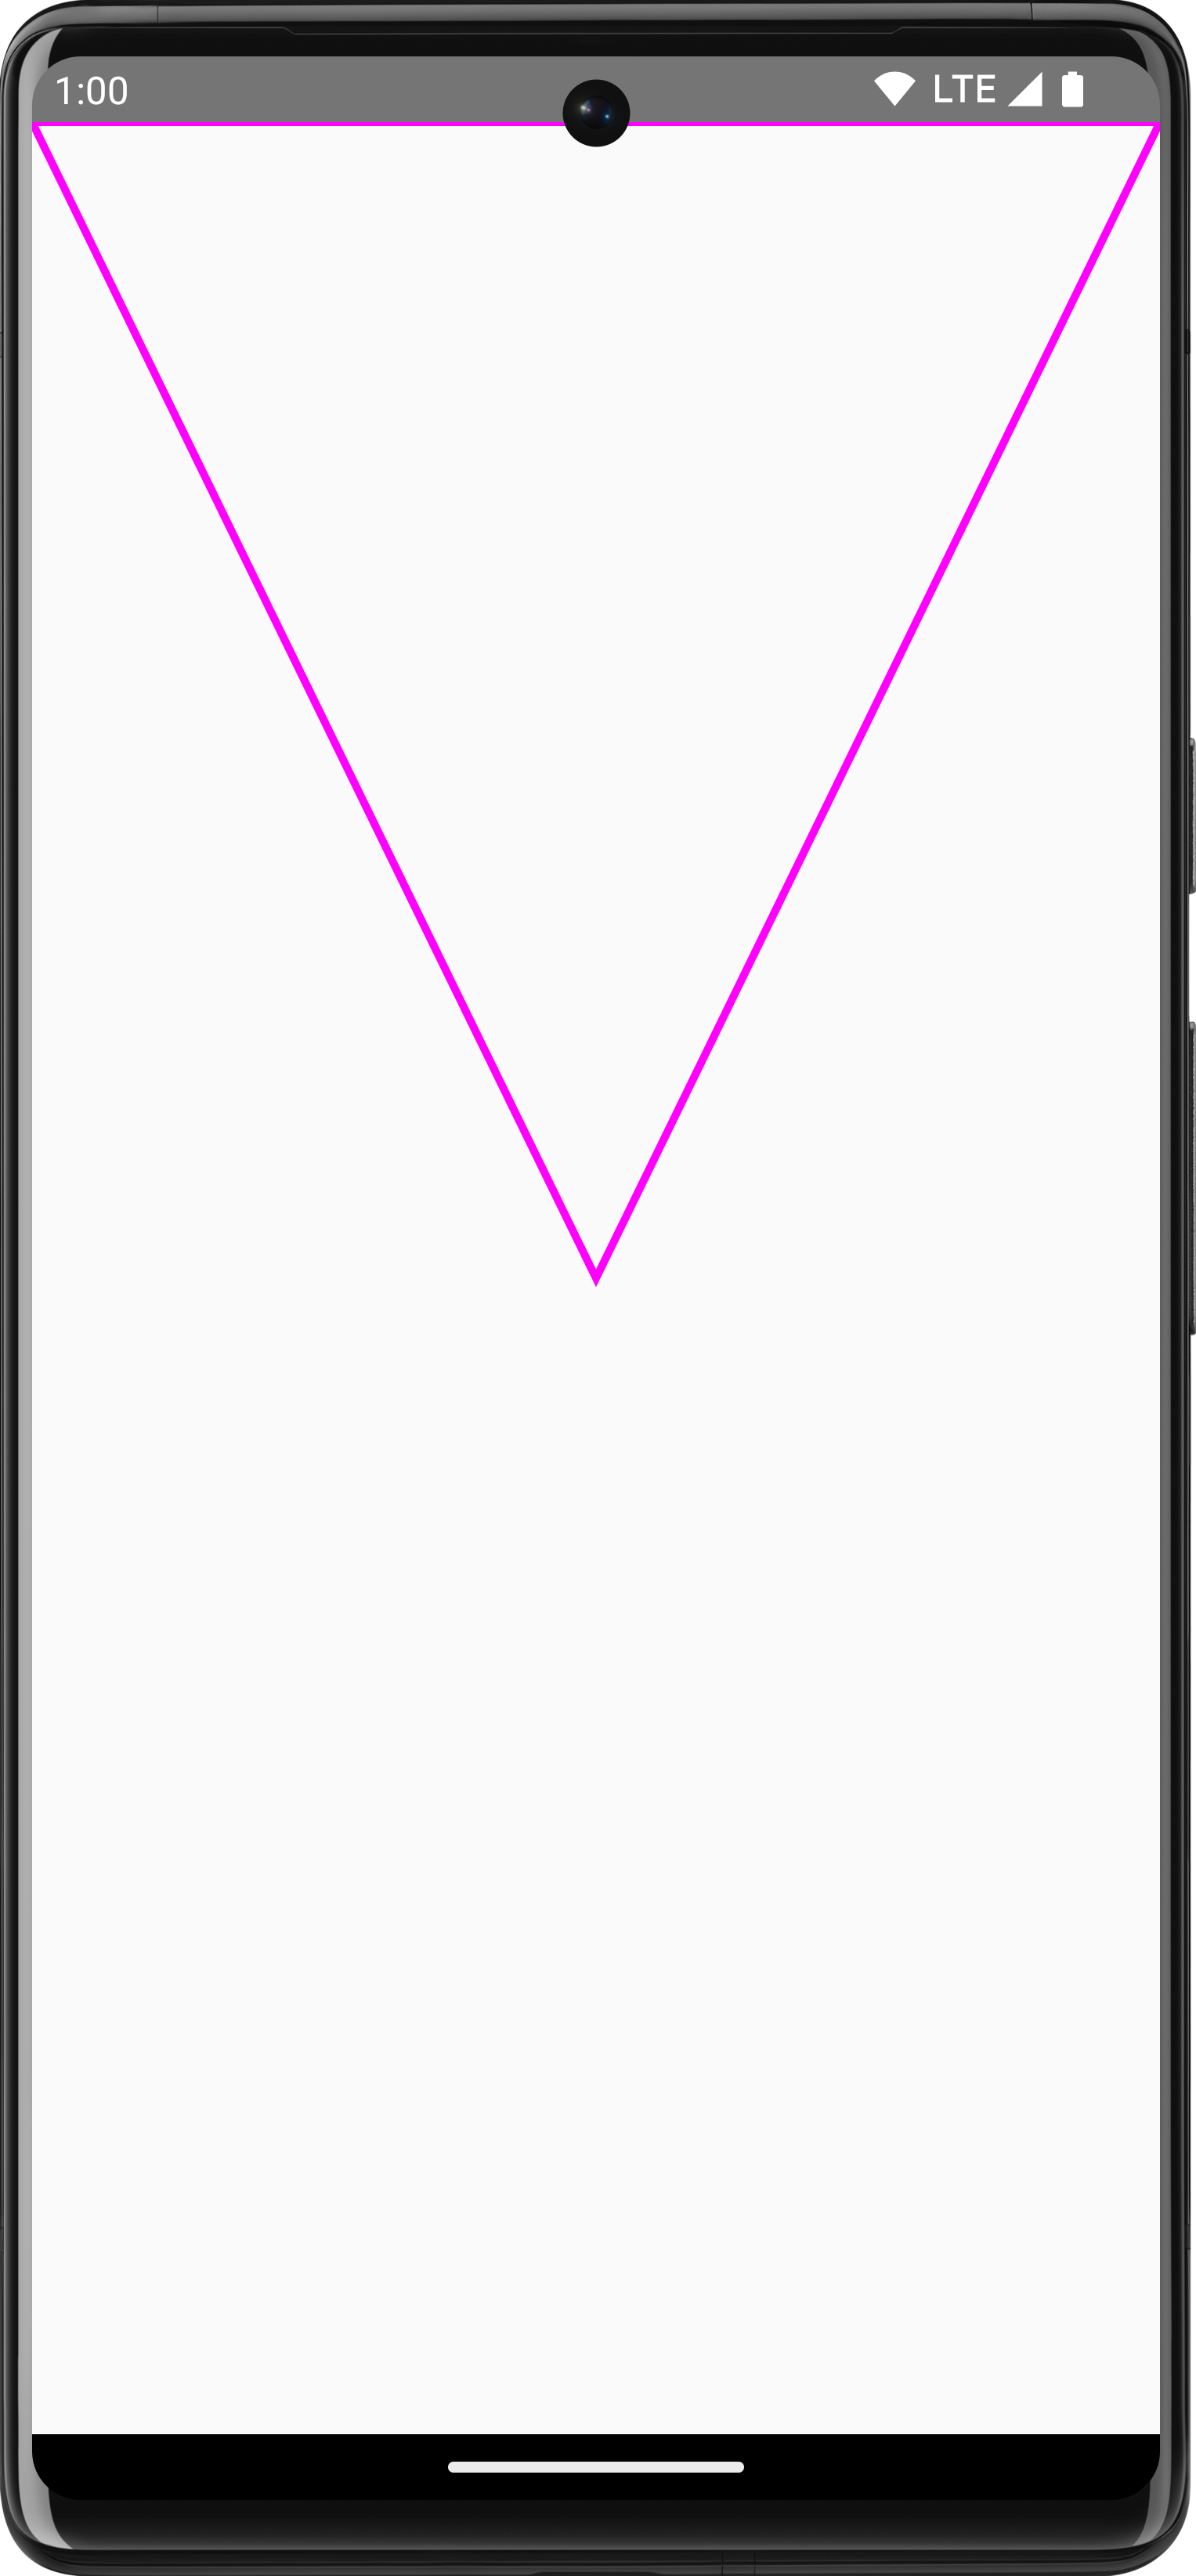 An upside-down purple path triangle drawn on Compose